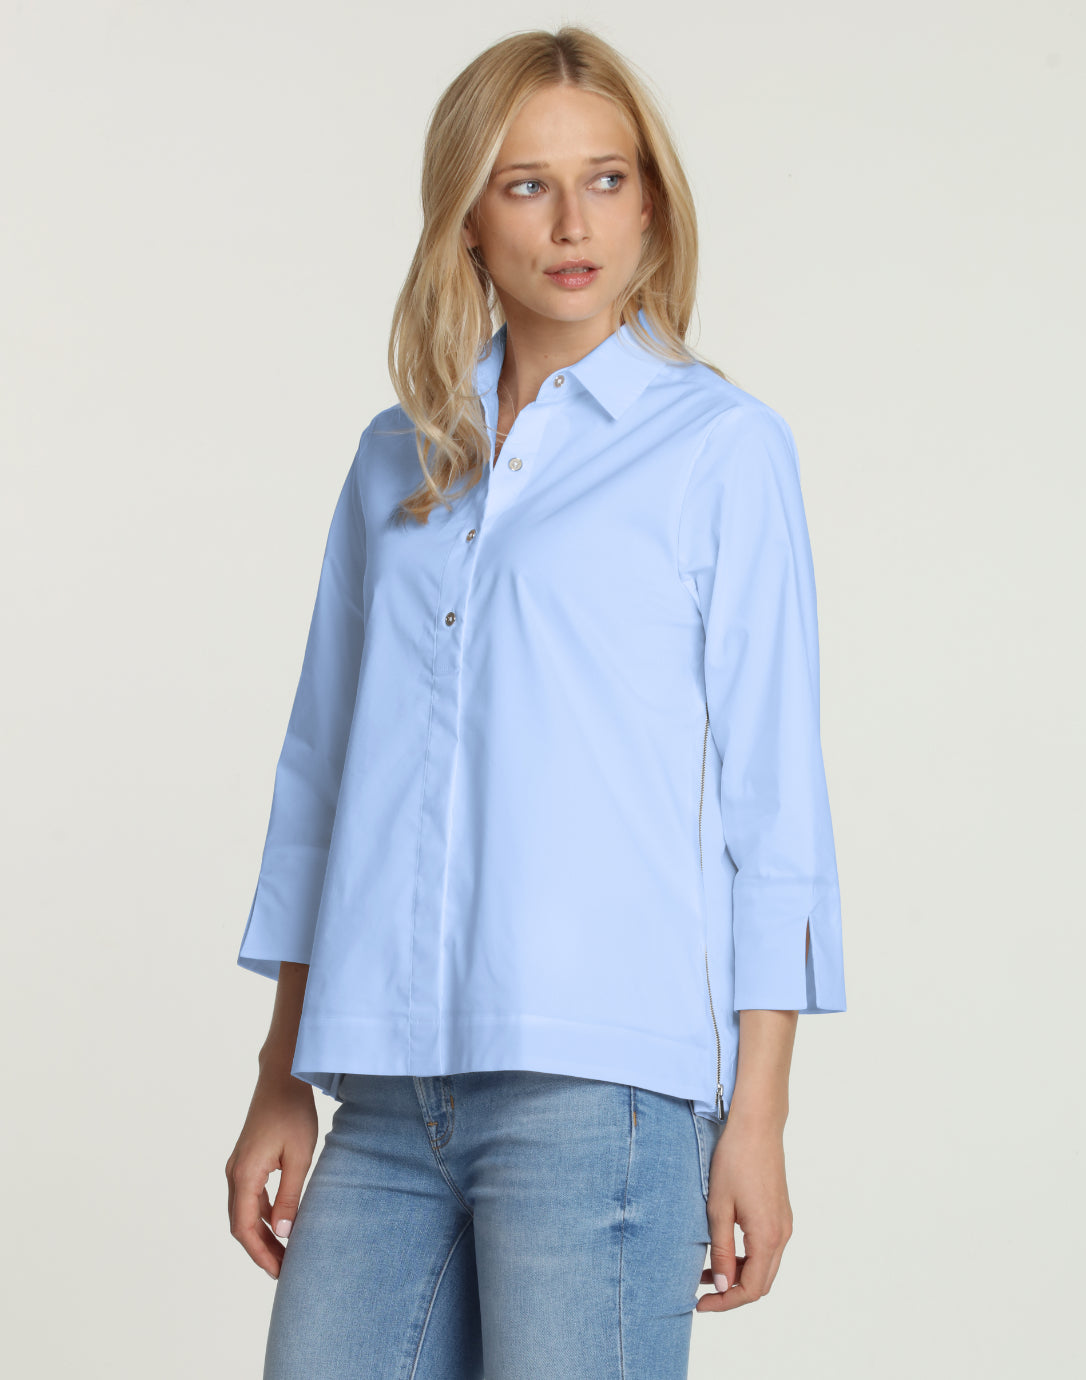 Zippers With Wu Shirt Sleeve Side Savannah Hinson – 3/4